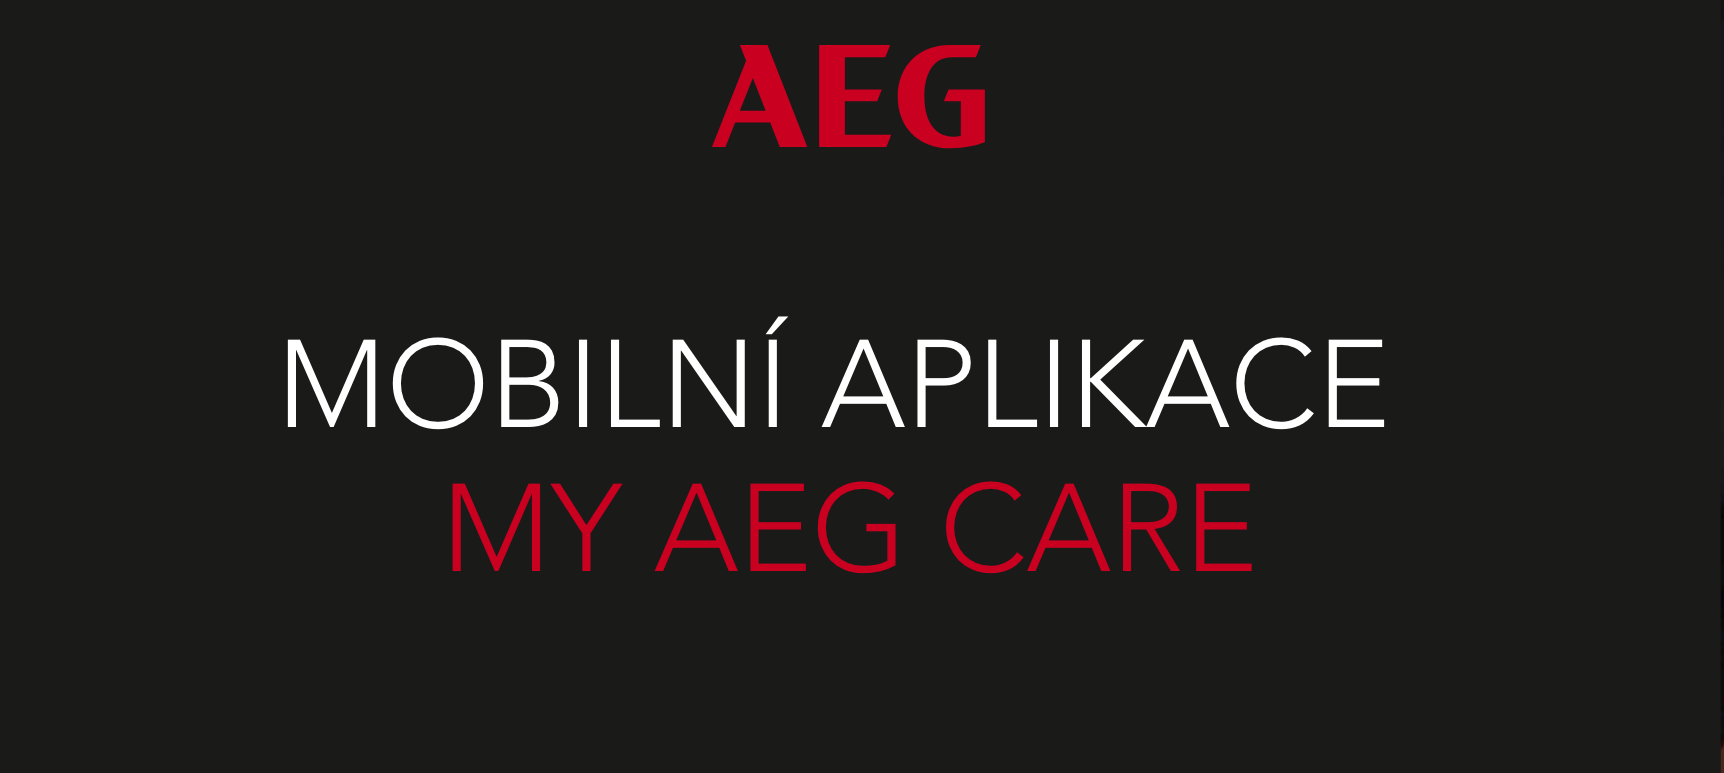 My AEG care